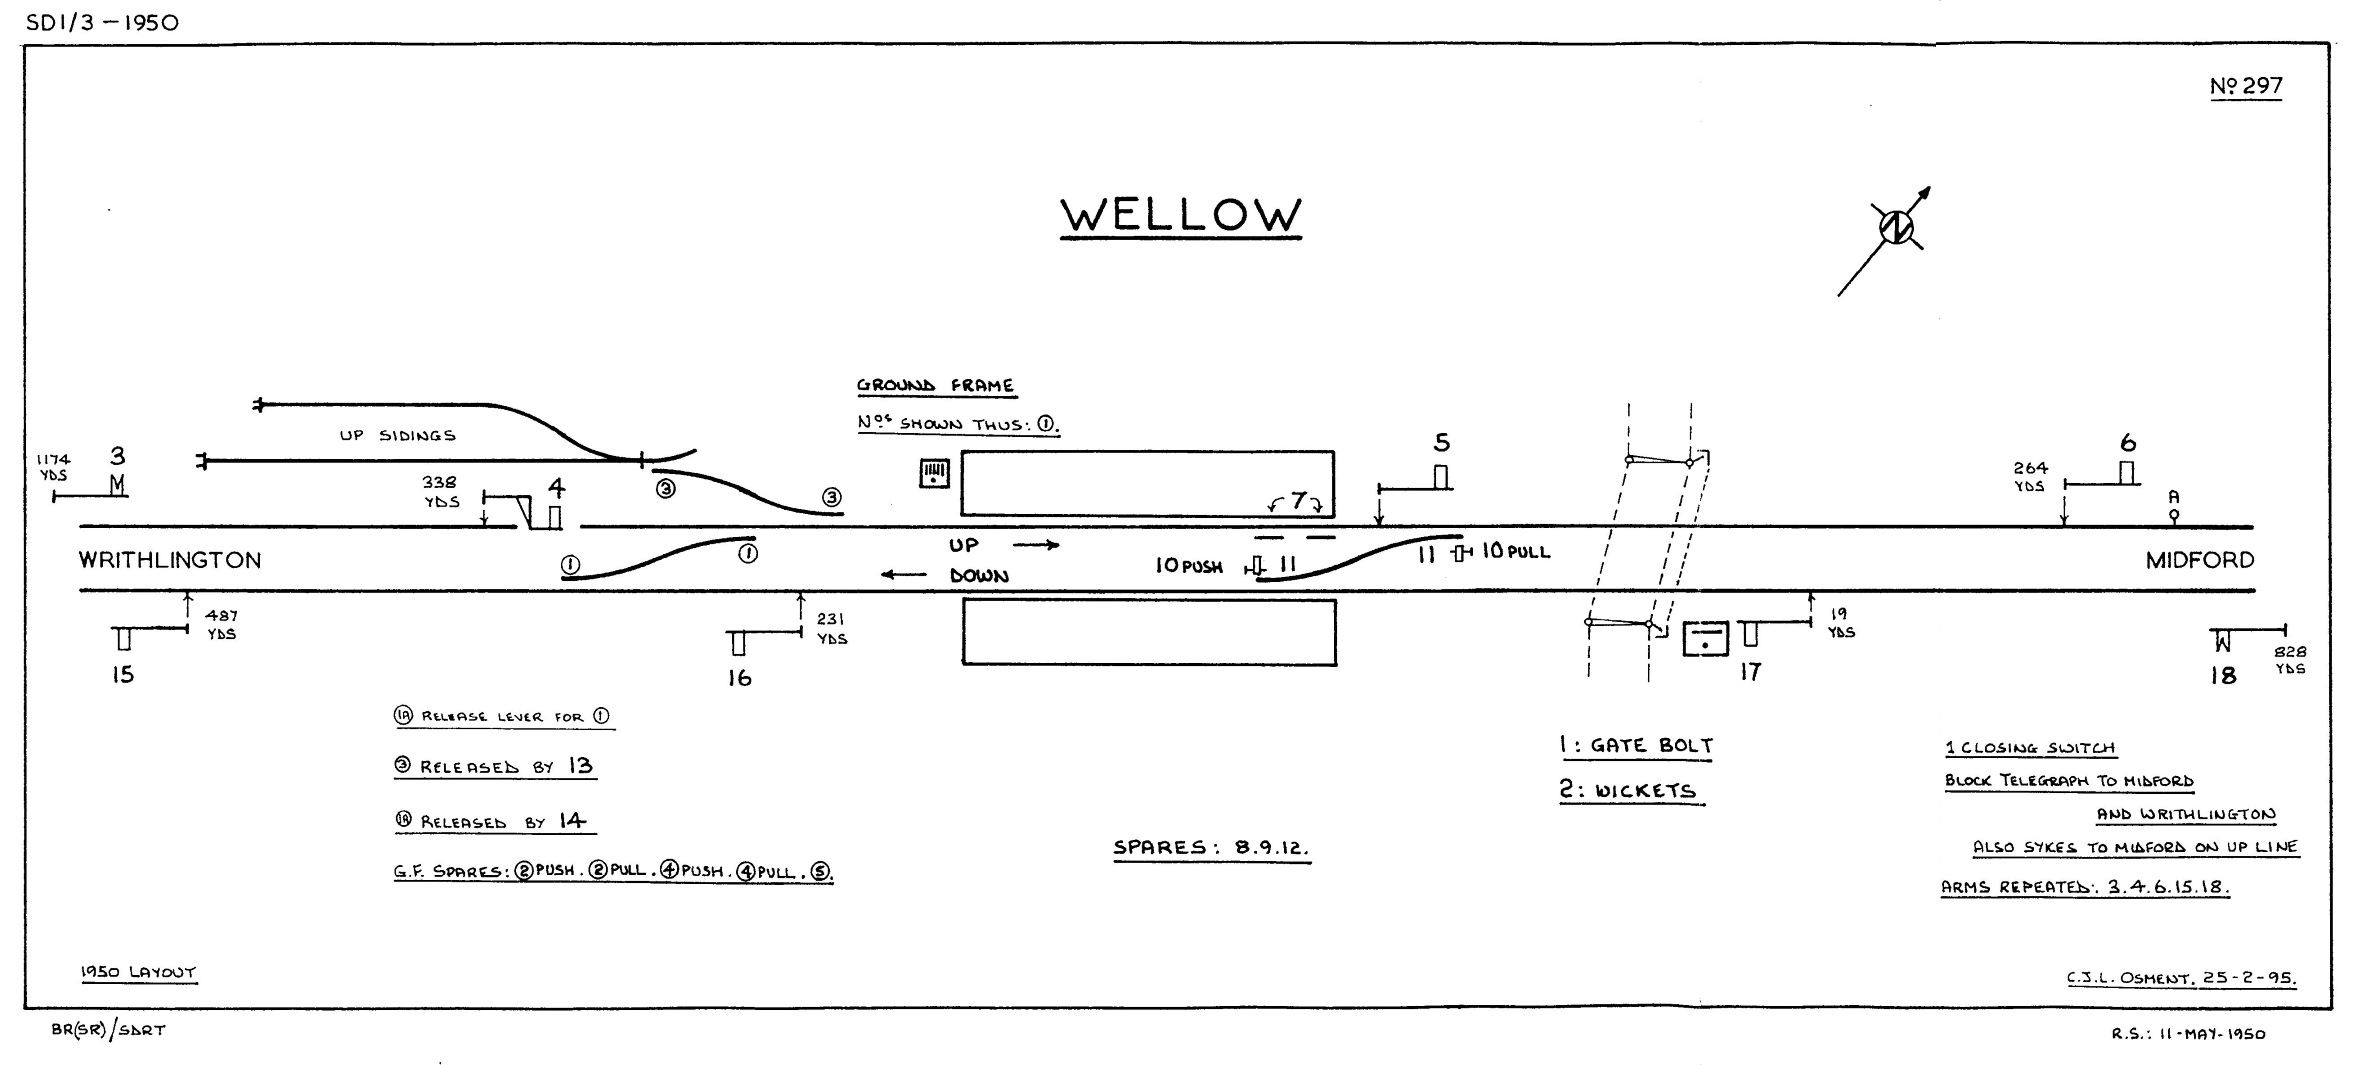 Wellow signal-box diagram circa-1950